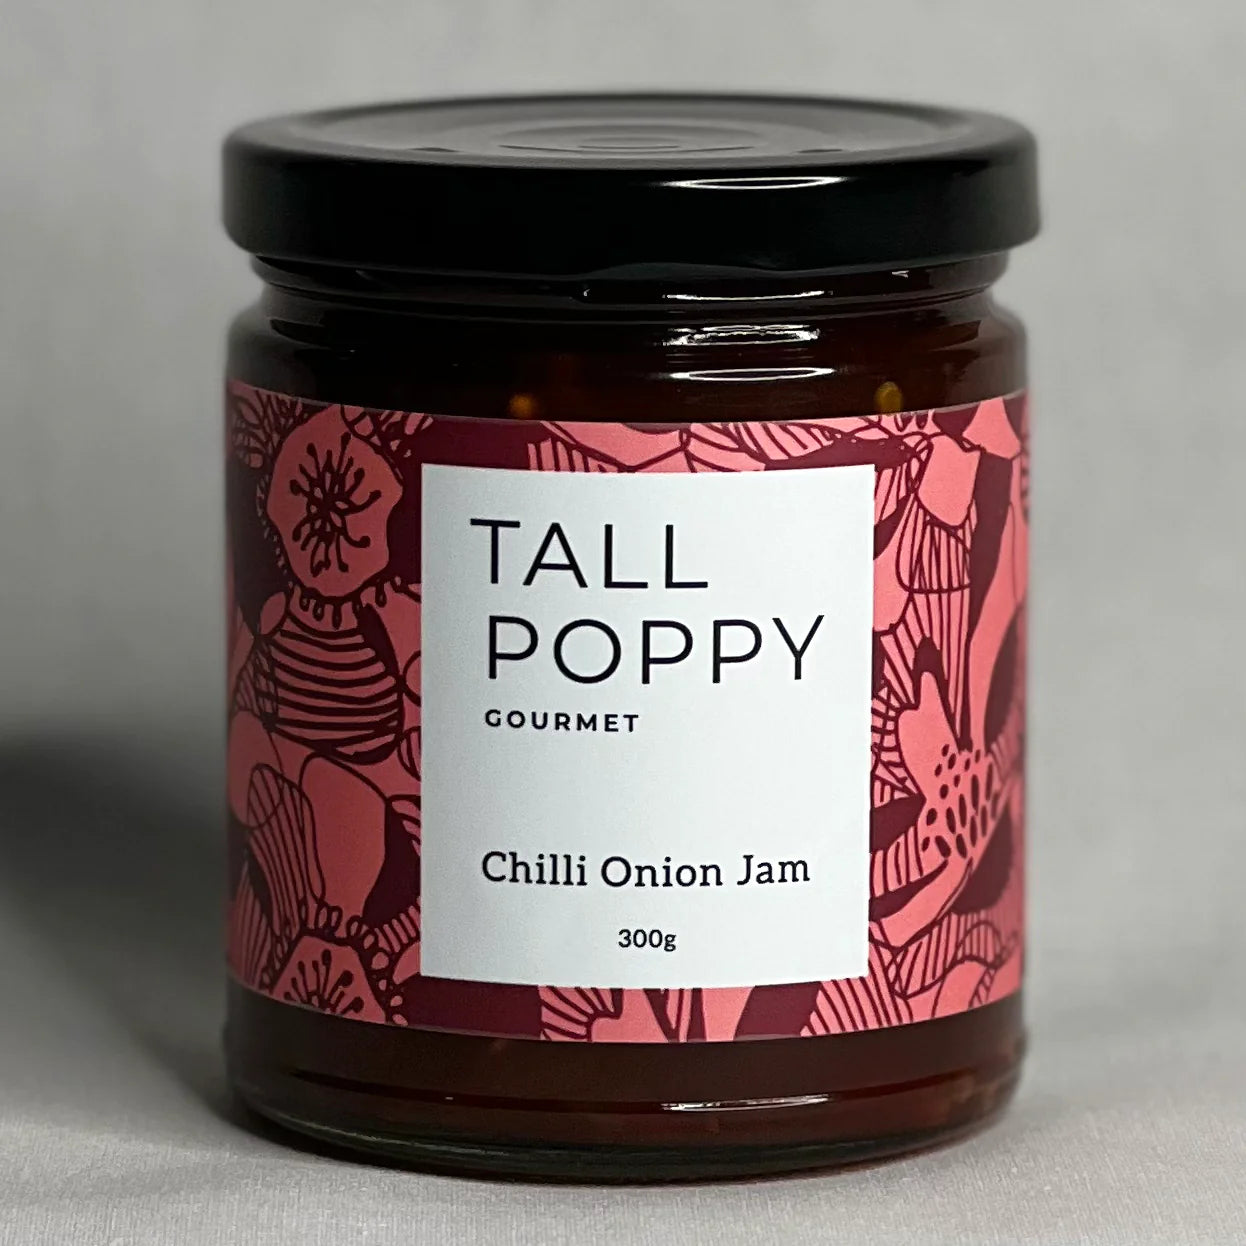 Tall Poppy Gourmet Chilli Onion Jam